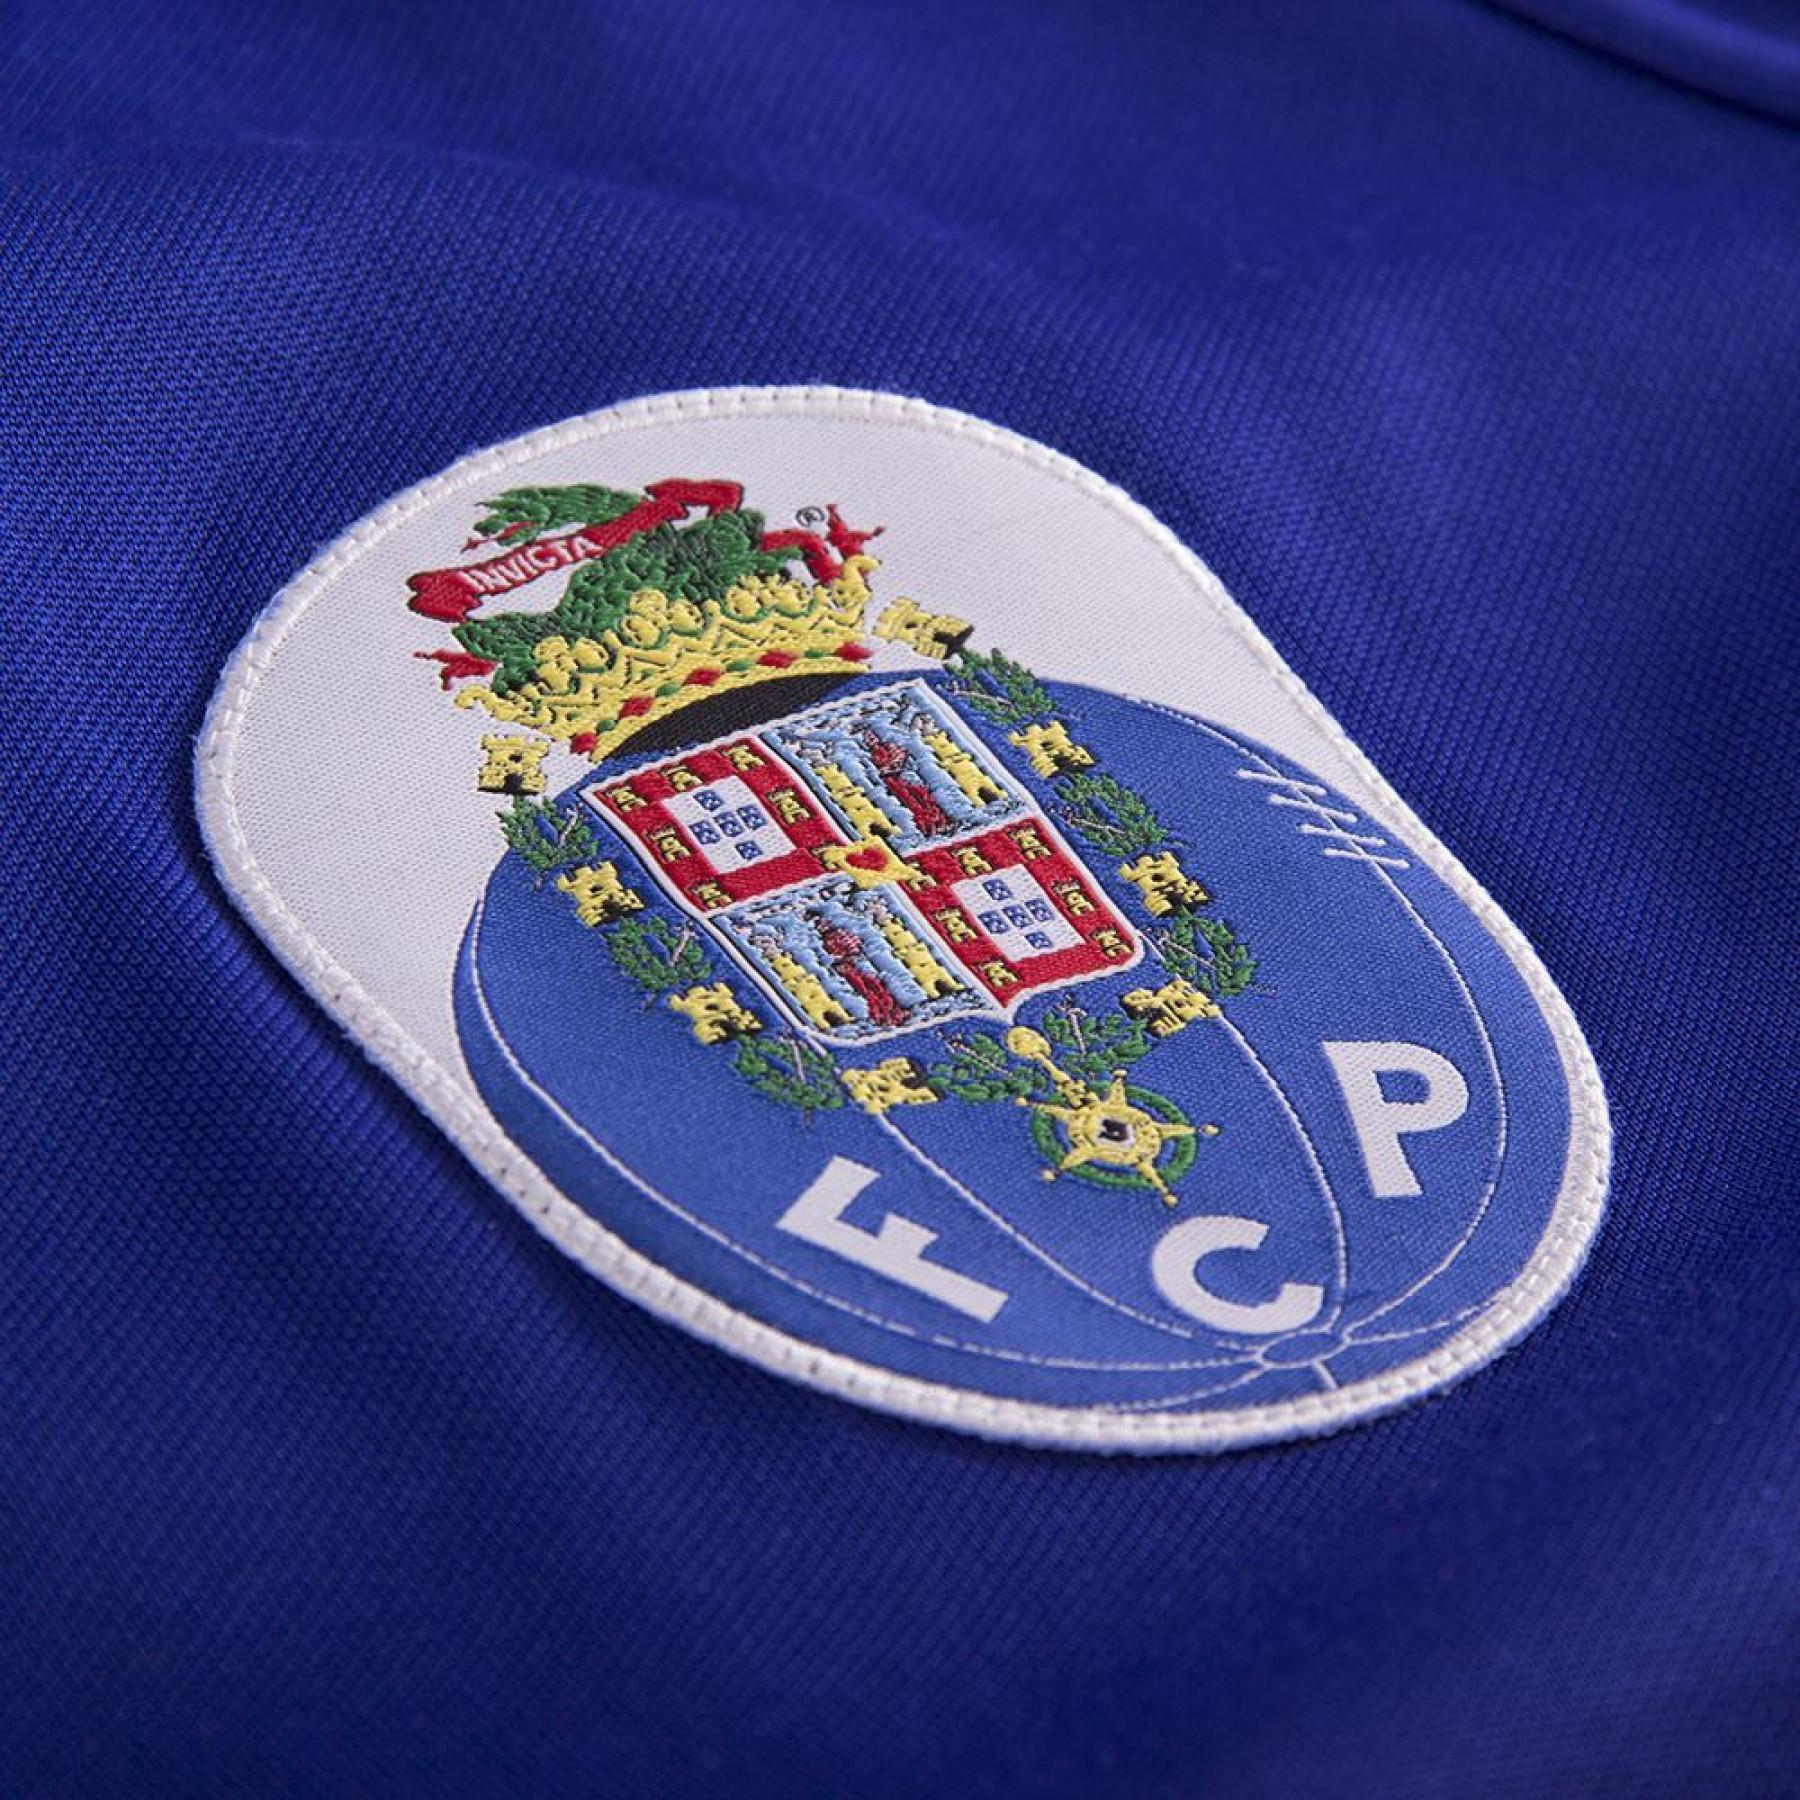 Retro tracksuit jacket Copa FC Porto 1985/86